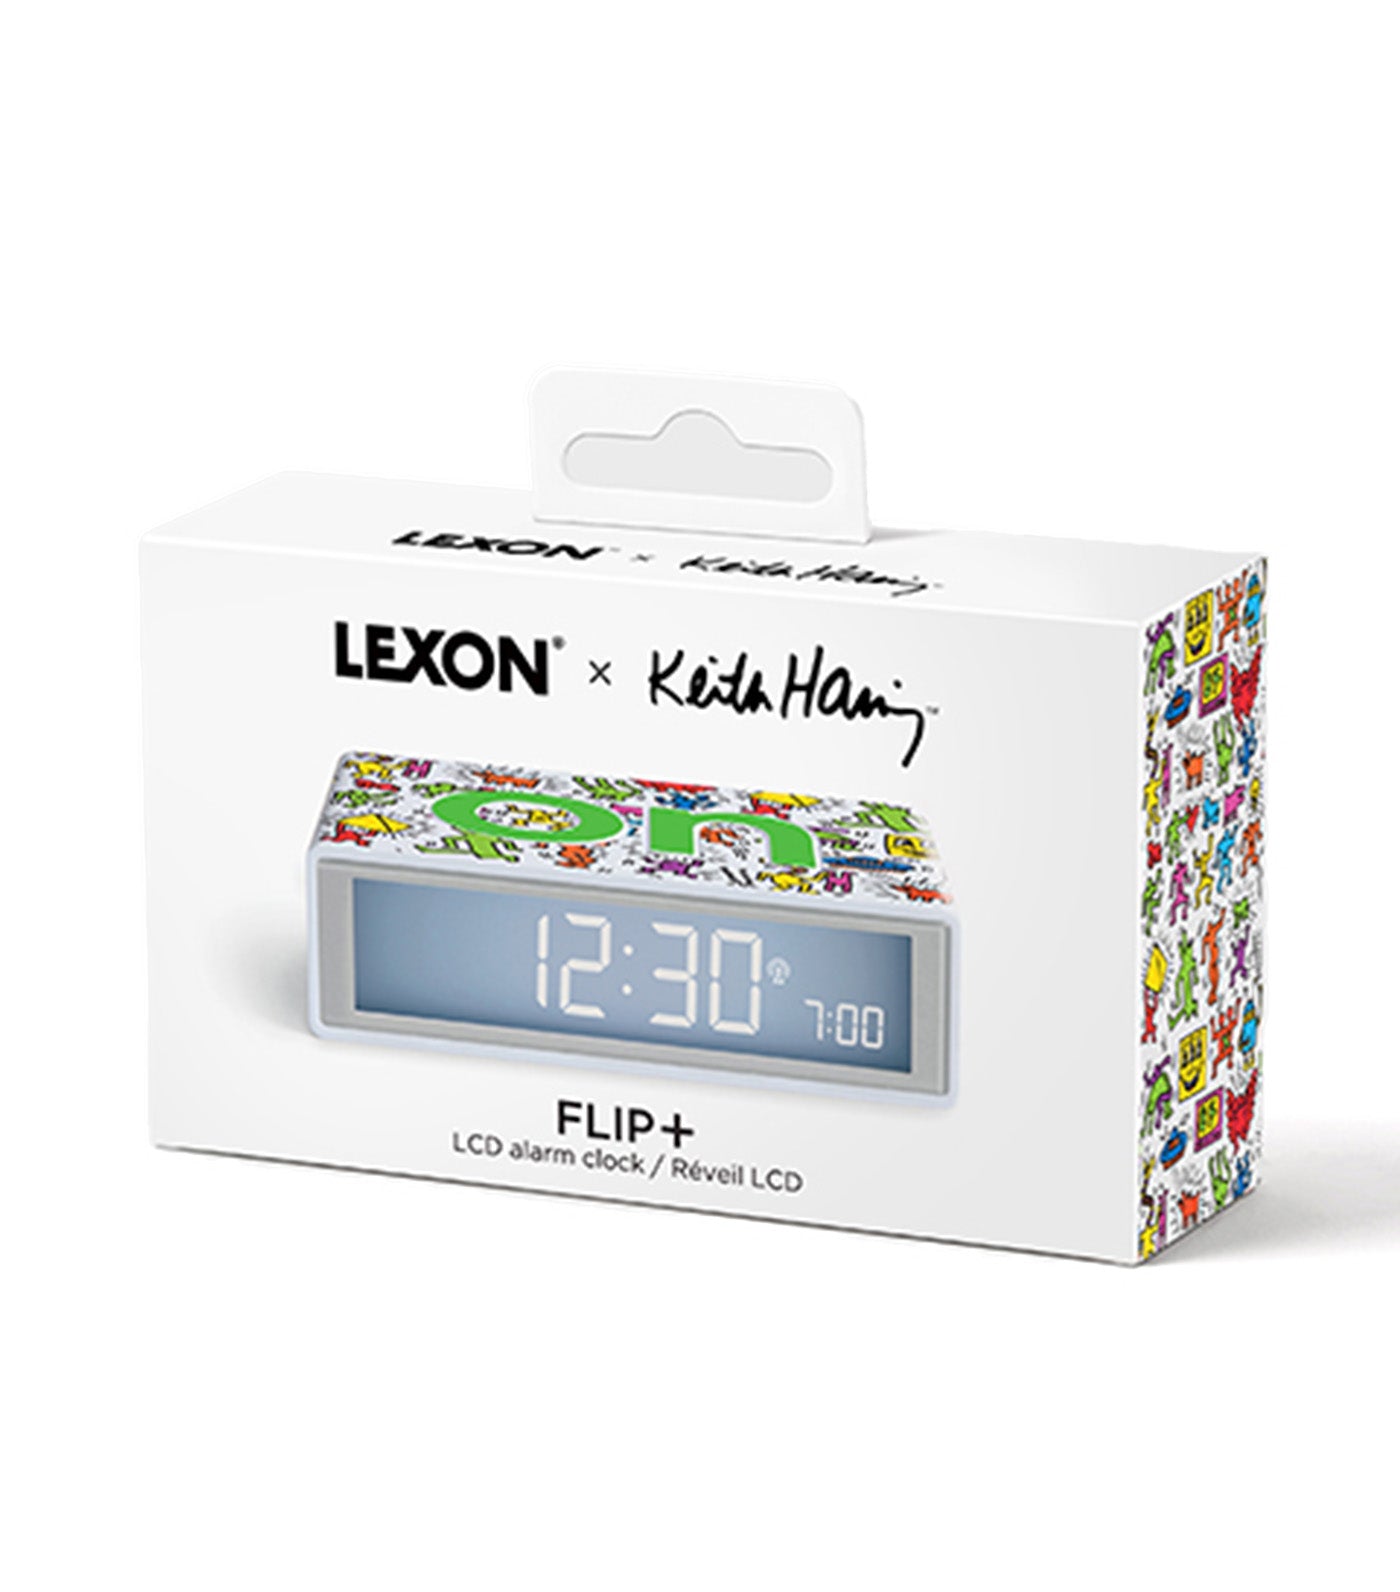 Lexon x Keith Haring Gift Set Happy